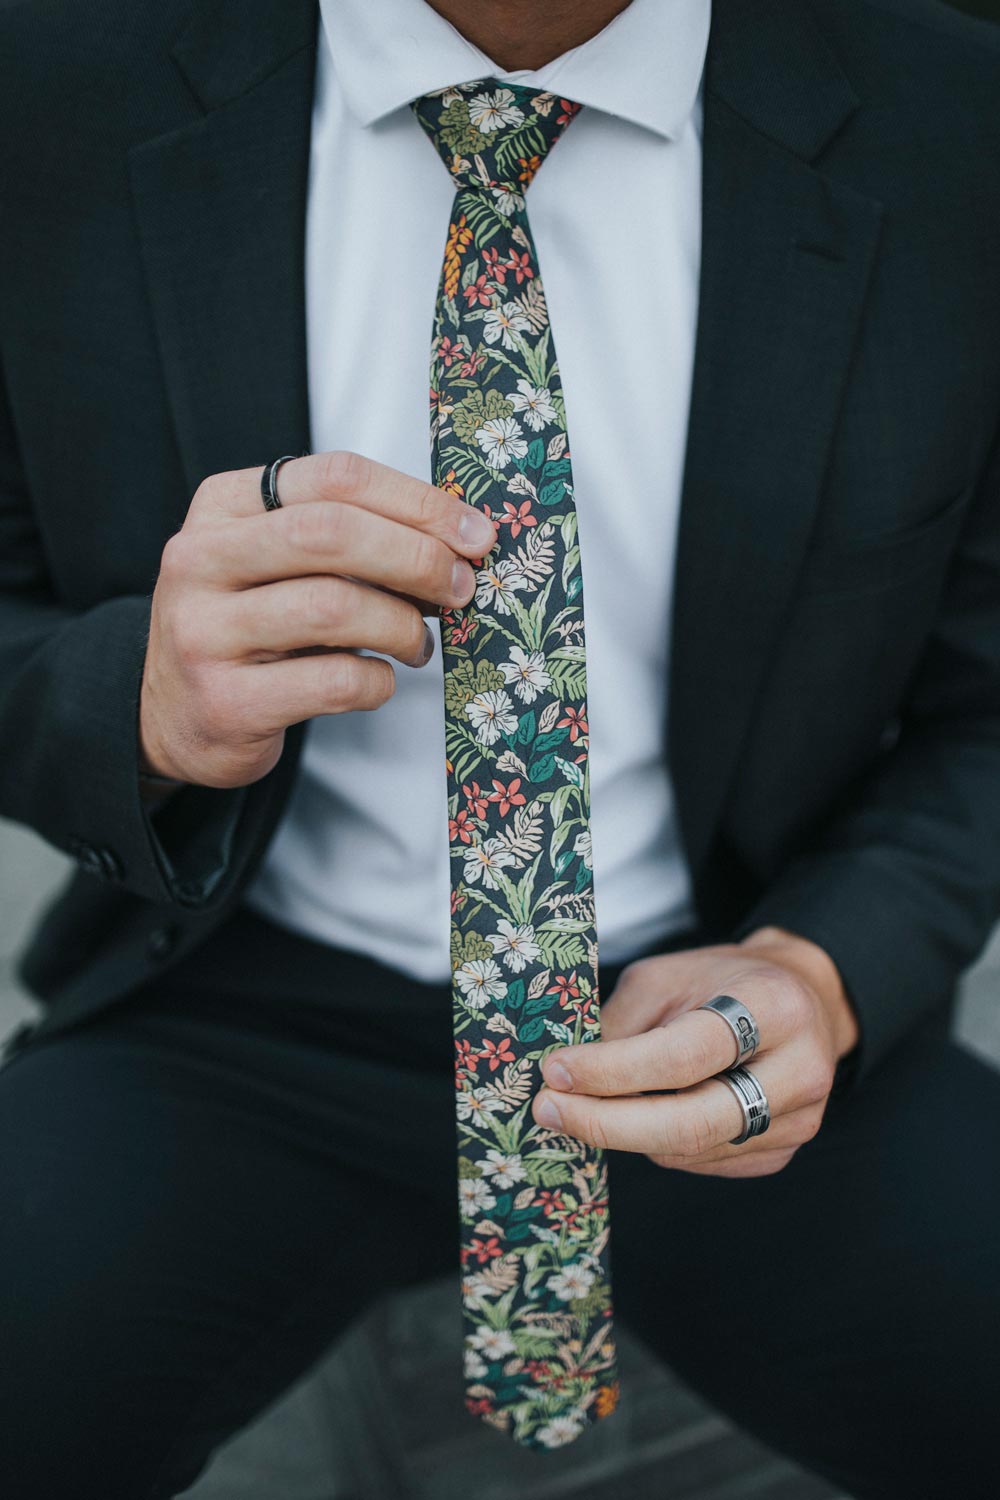 Jumanji tie worn with a white shirt and dark gray suit.